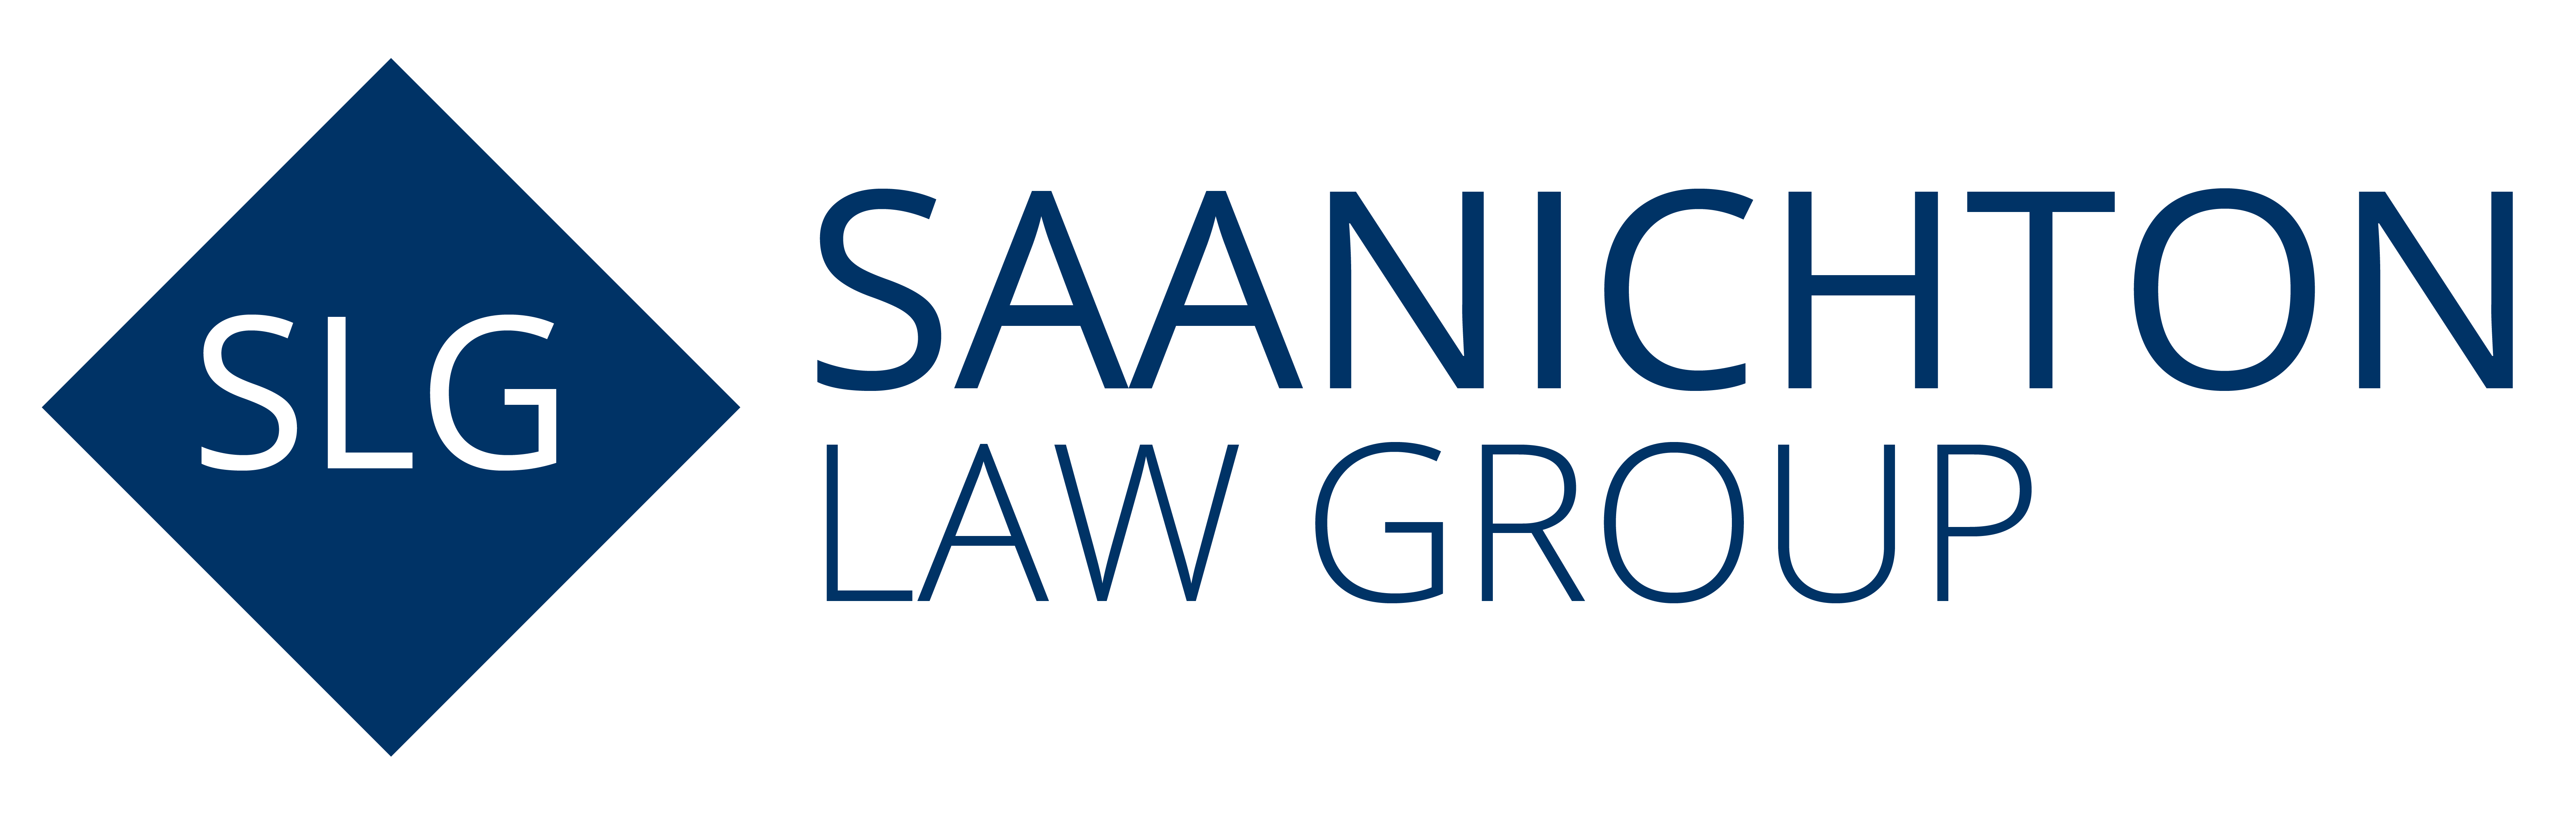 Saanichton Law Group